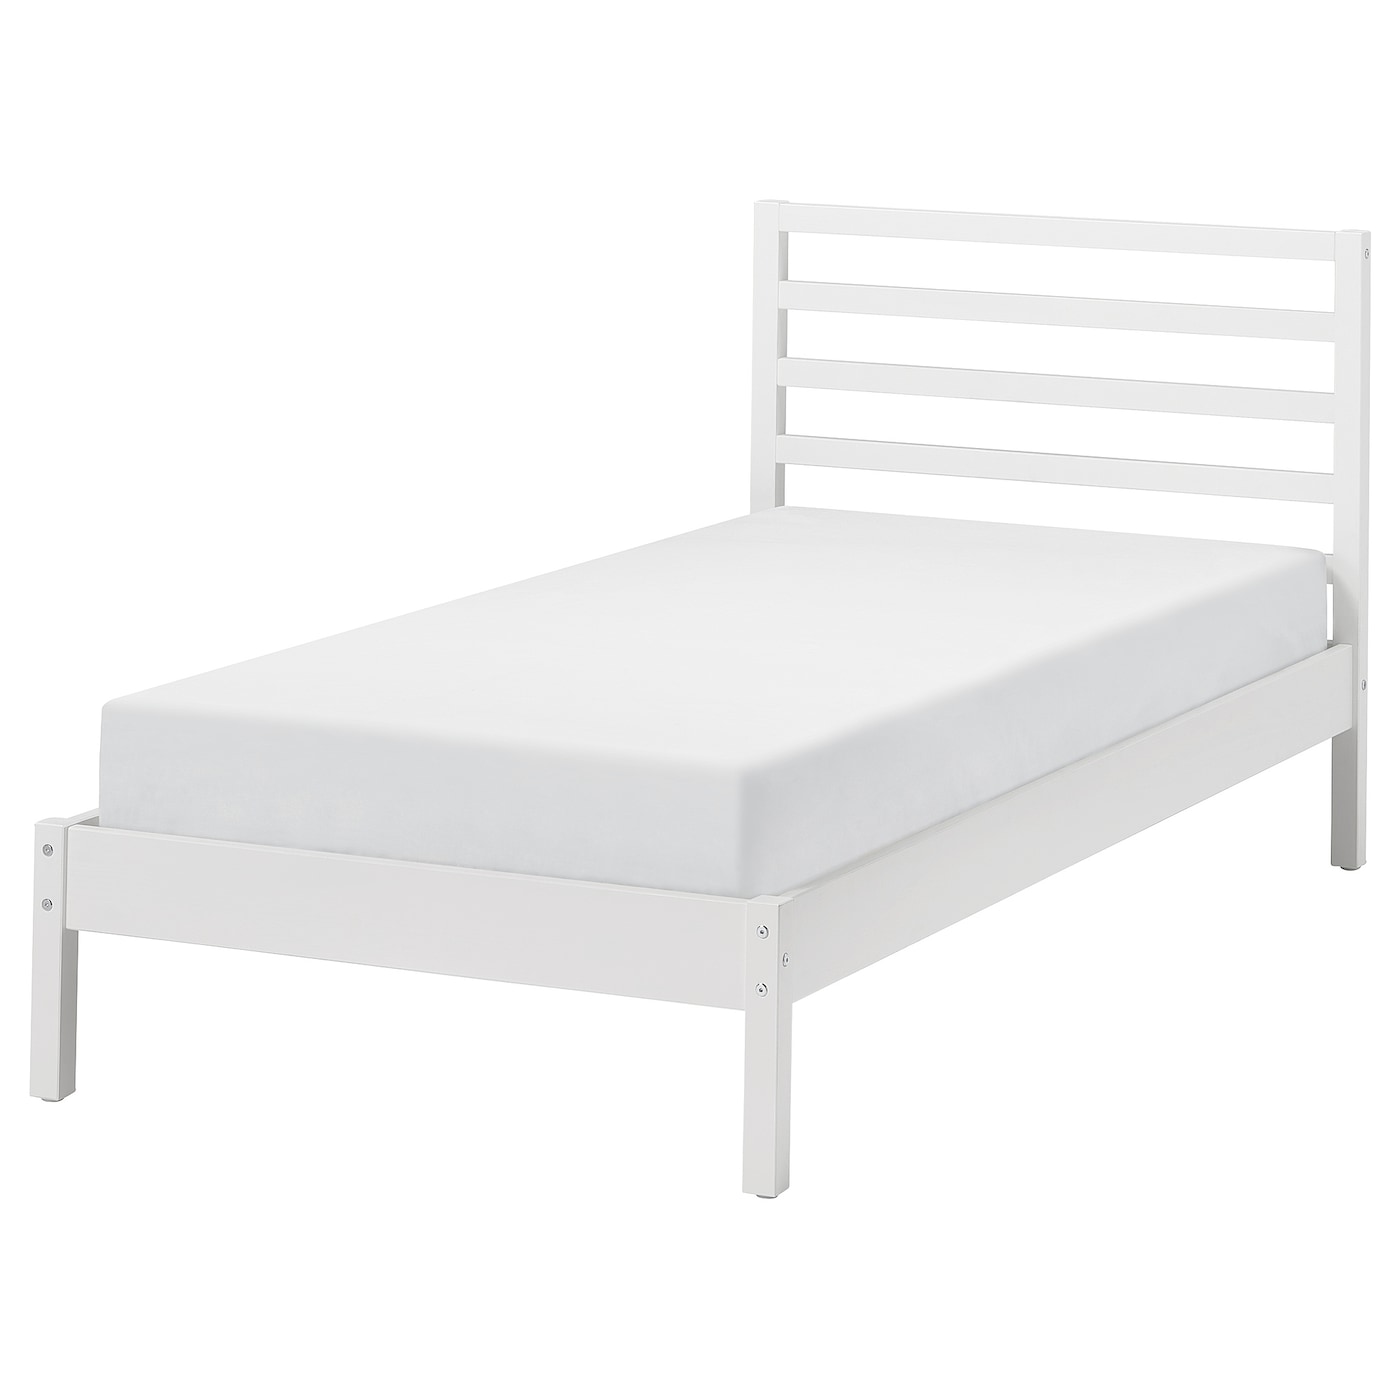 Каркас кровати - TARVA  IKEA/  ТАРВА ИКЕА,  209х98 см, белый